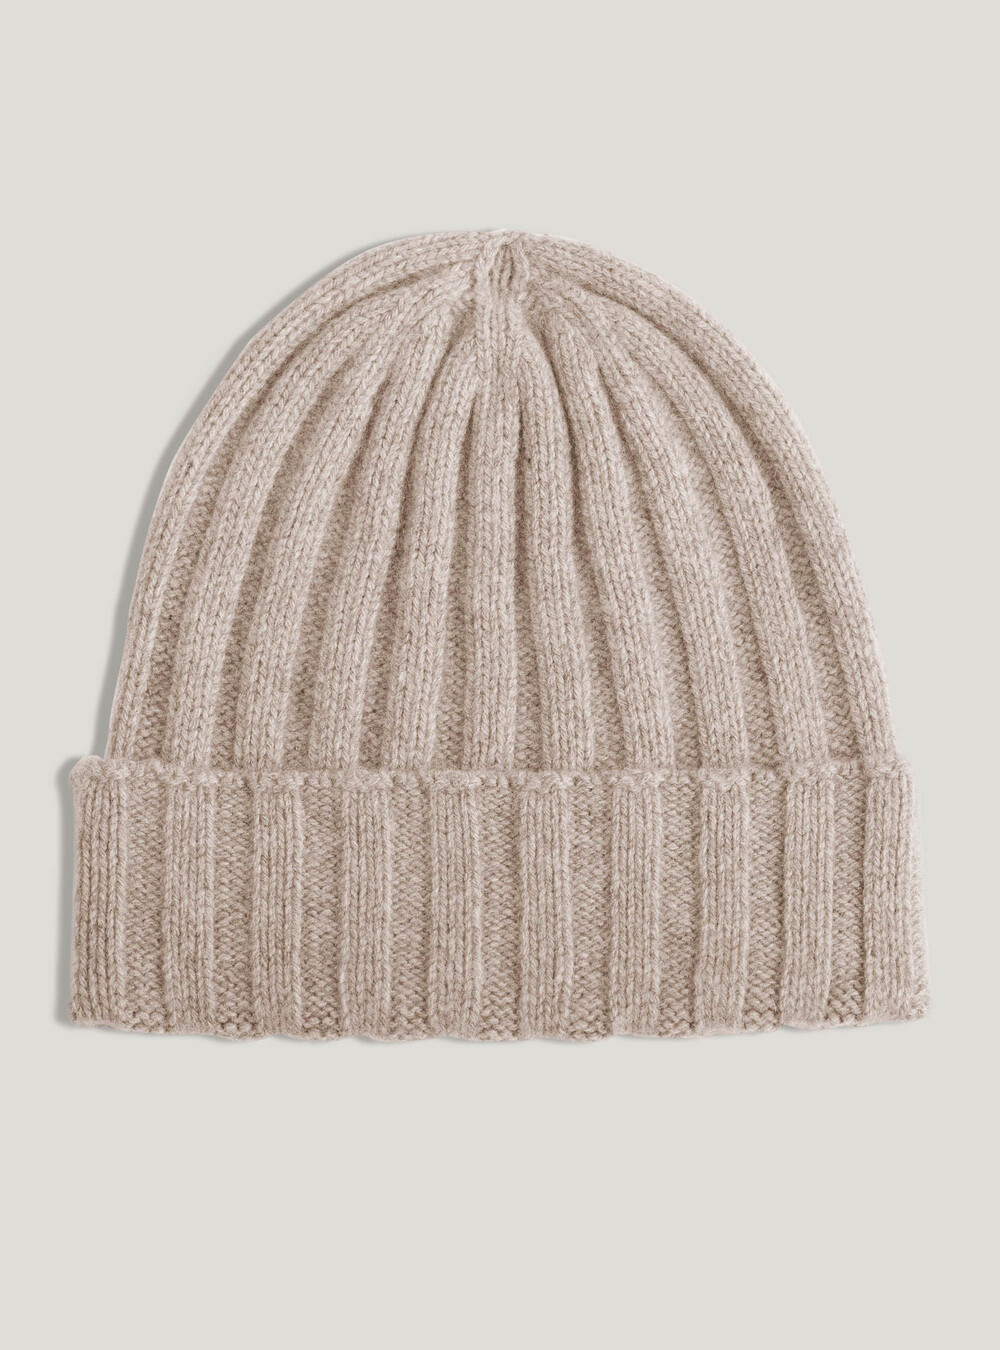 Cappello in cashmere costa inglese | Gutteridge |  catalog-gutteridge-storefront Uomo